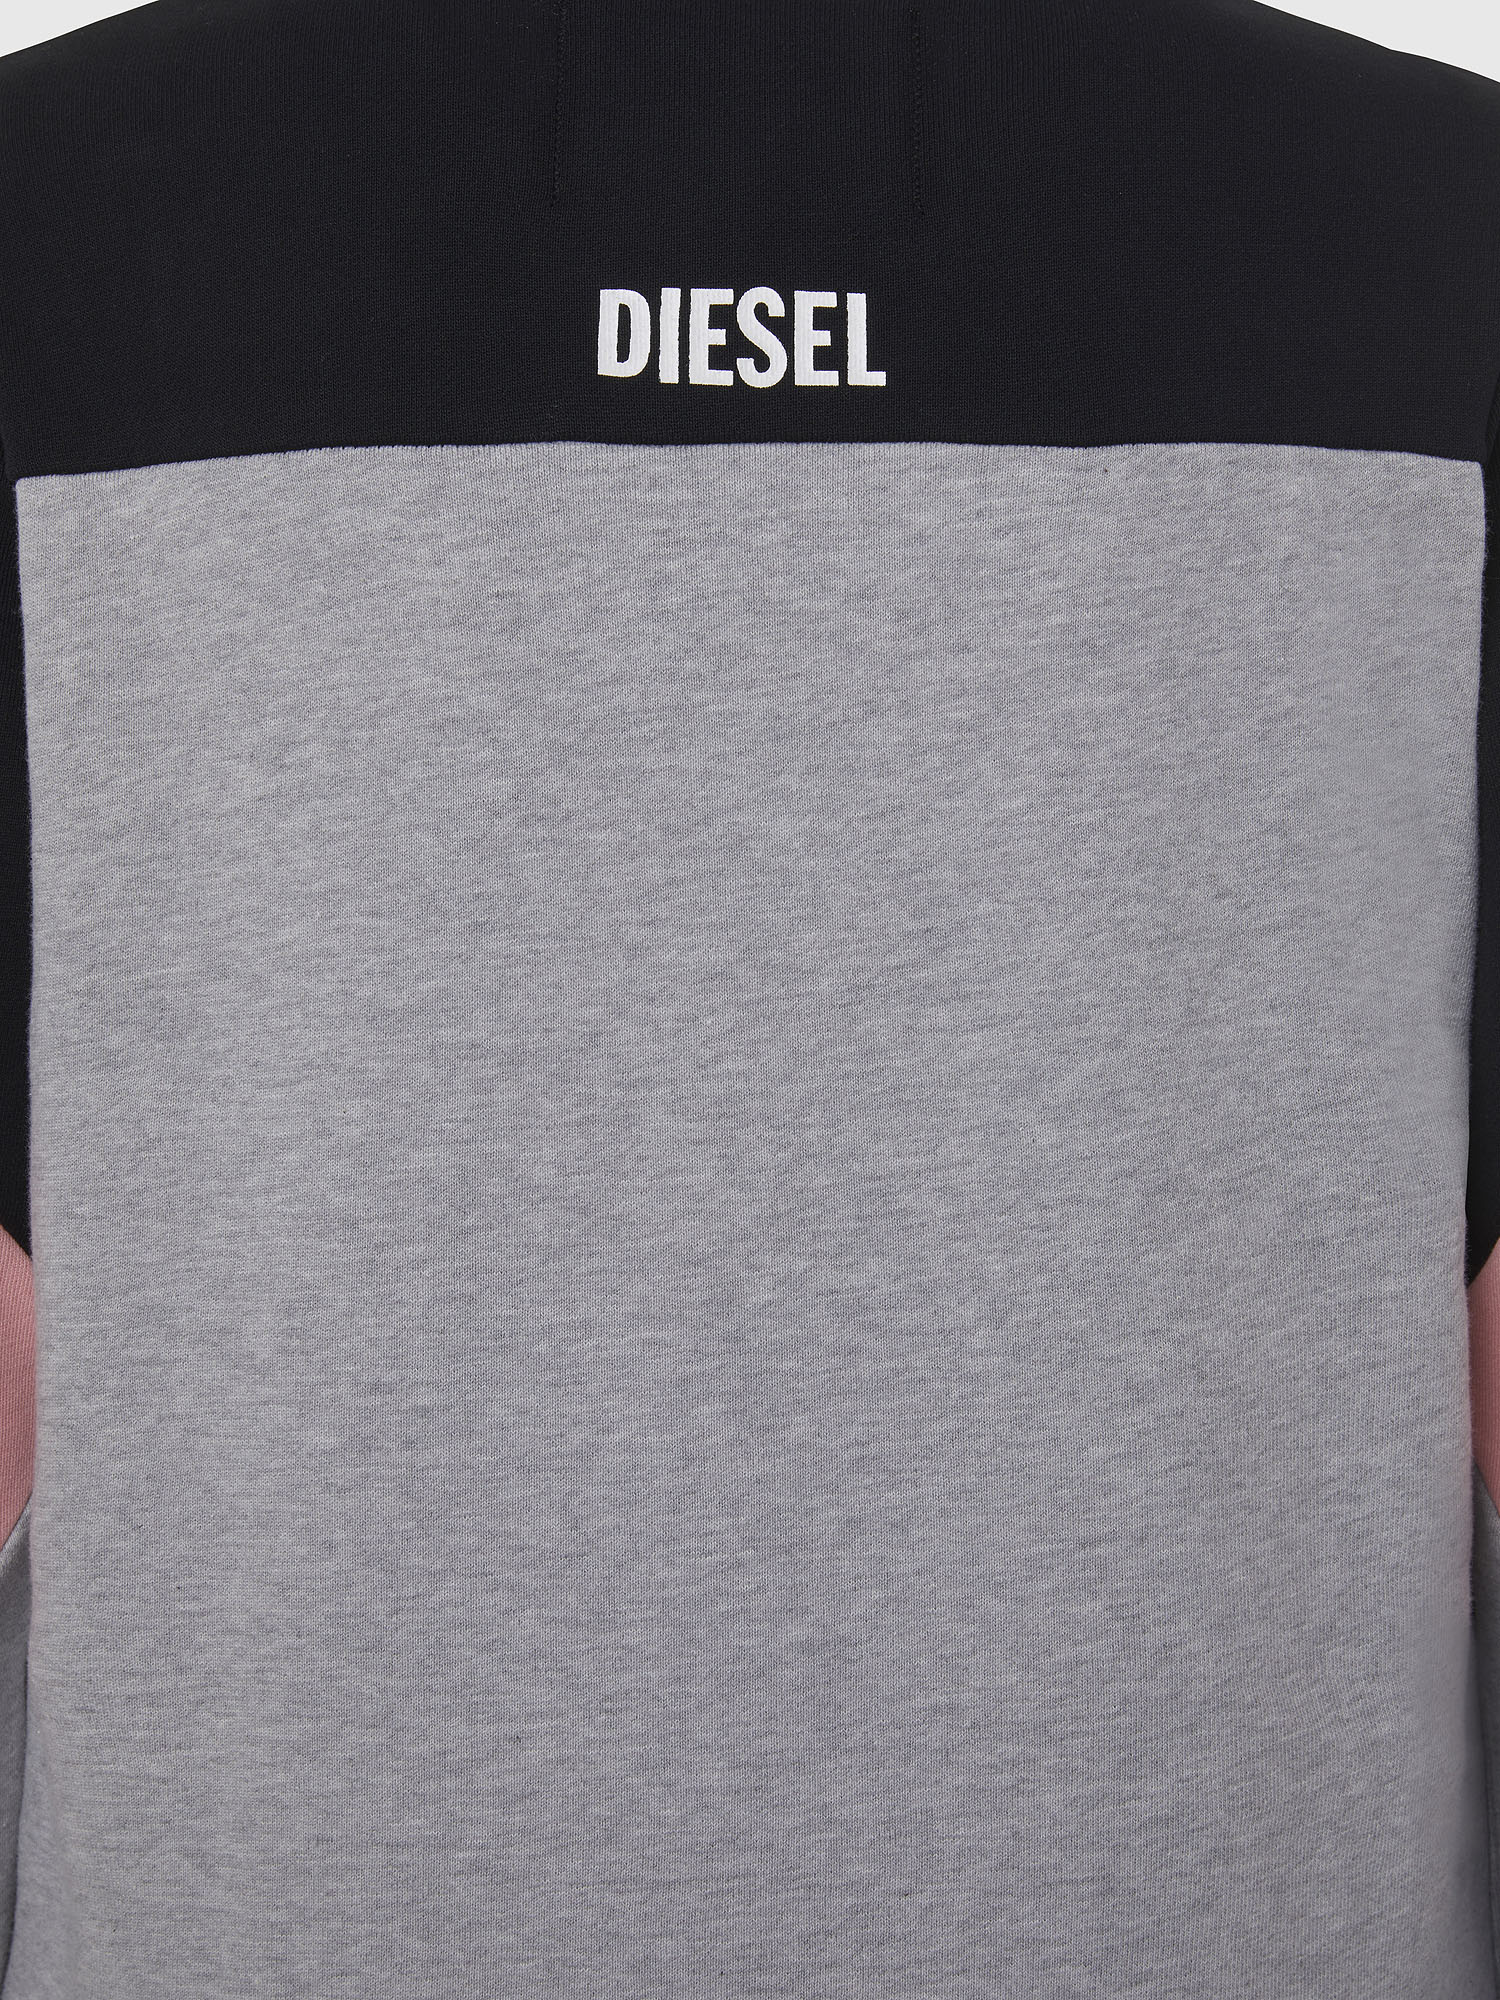 Diesel - UFLT-PHYLOSH, Gray/Black - Image 4